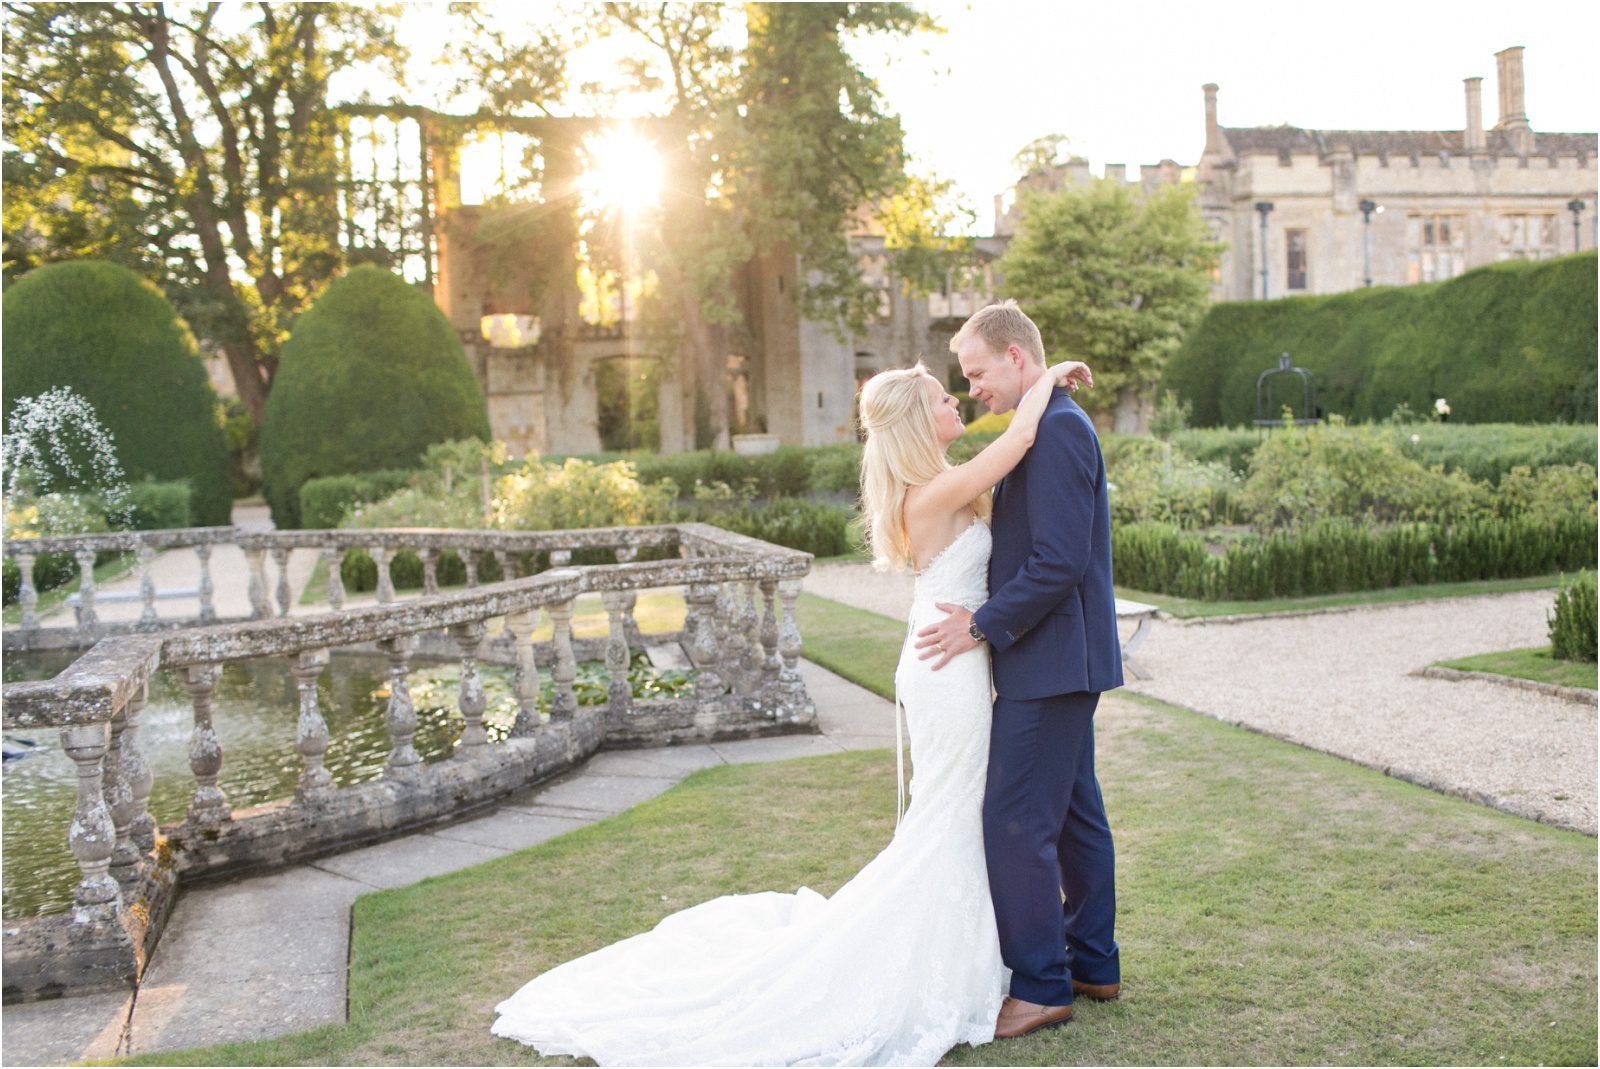 Sunset wedding photos at Sudeley Castle